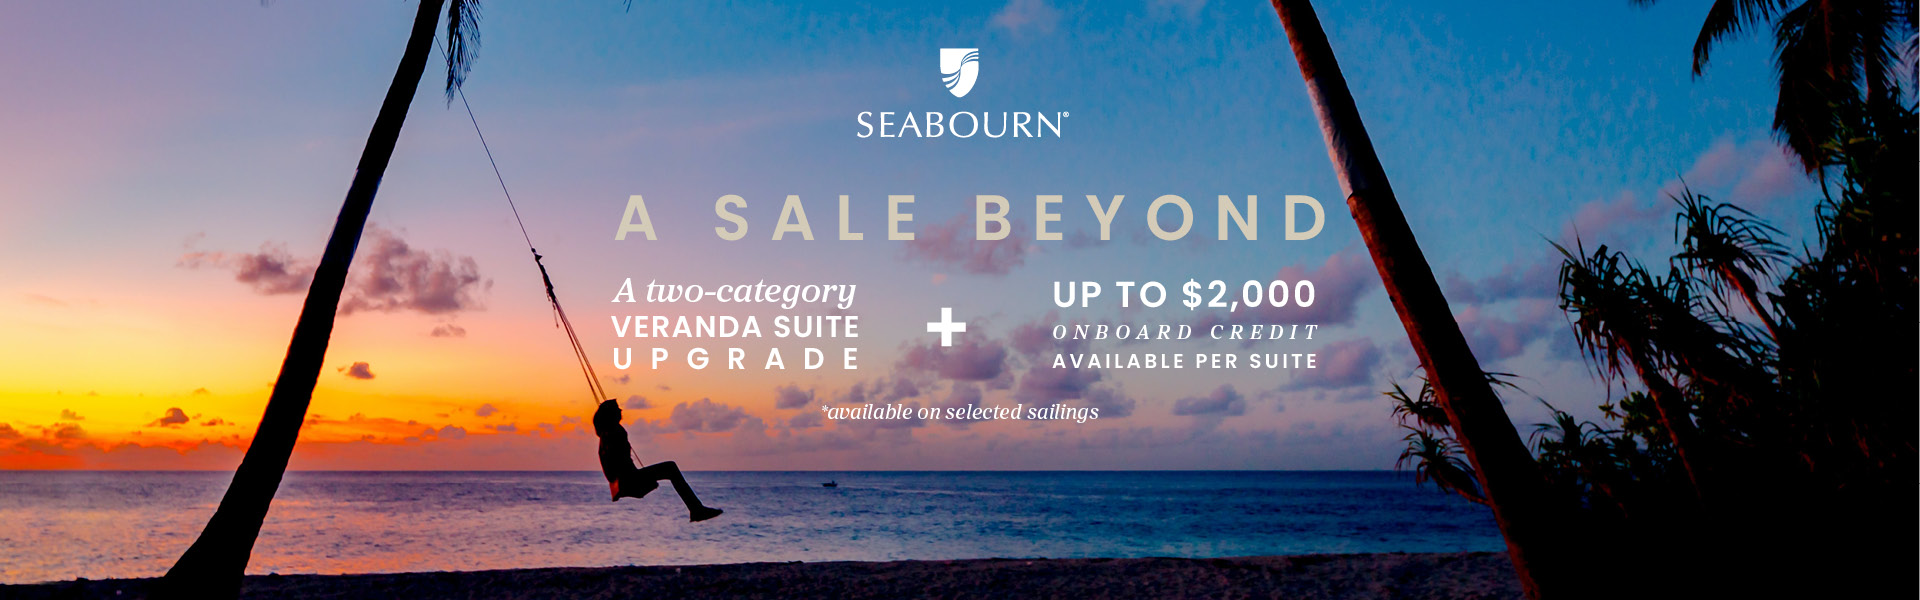 Seabourn - A Sale Beyond